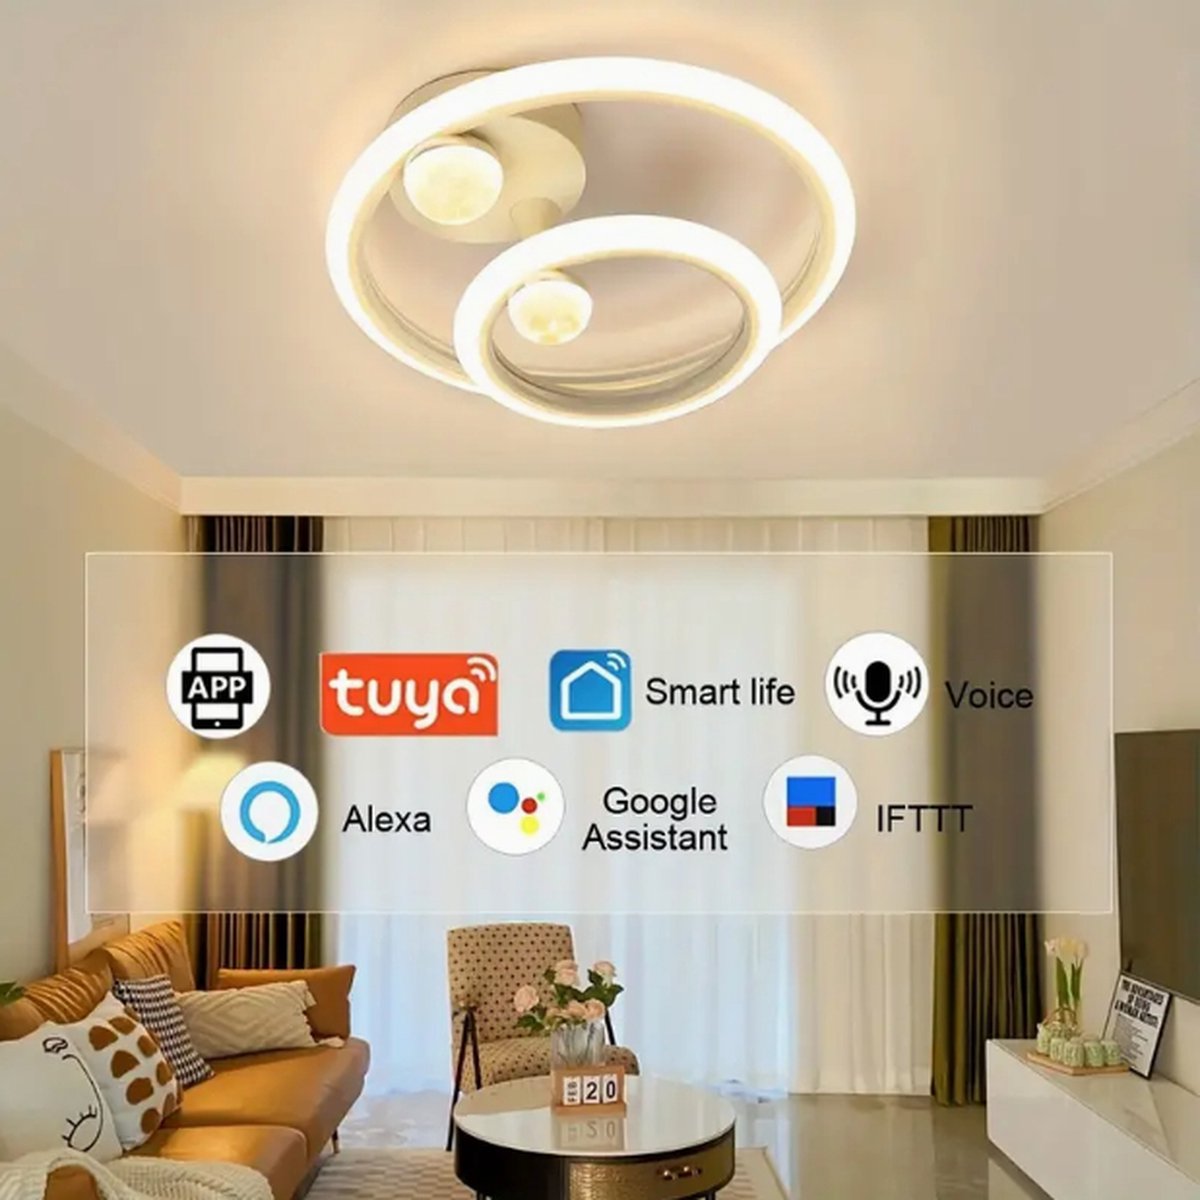 Lampe LED G4 - 2W - 220V - blanc chaud - 150 Lumen